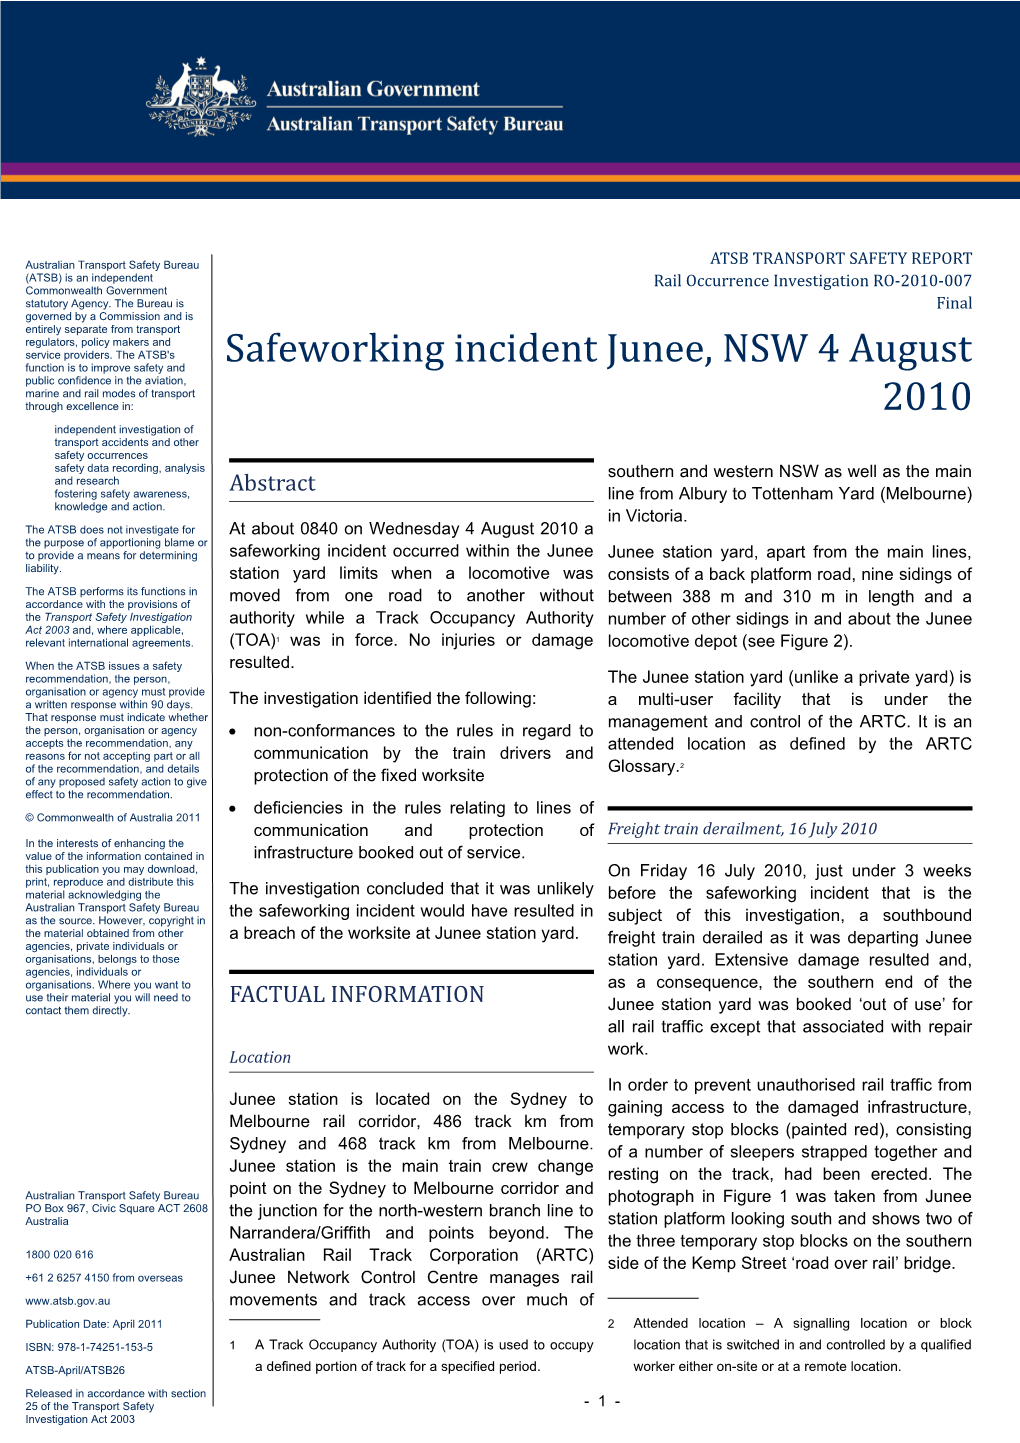 Safeworking Incident Junee, NSW 4 August 2010